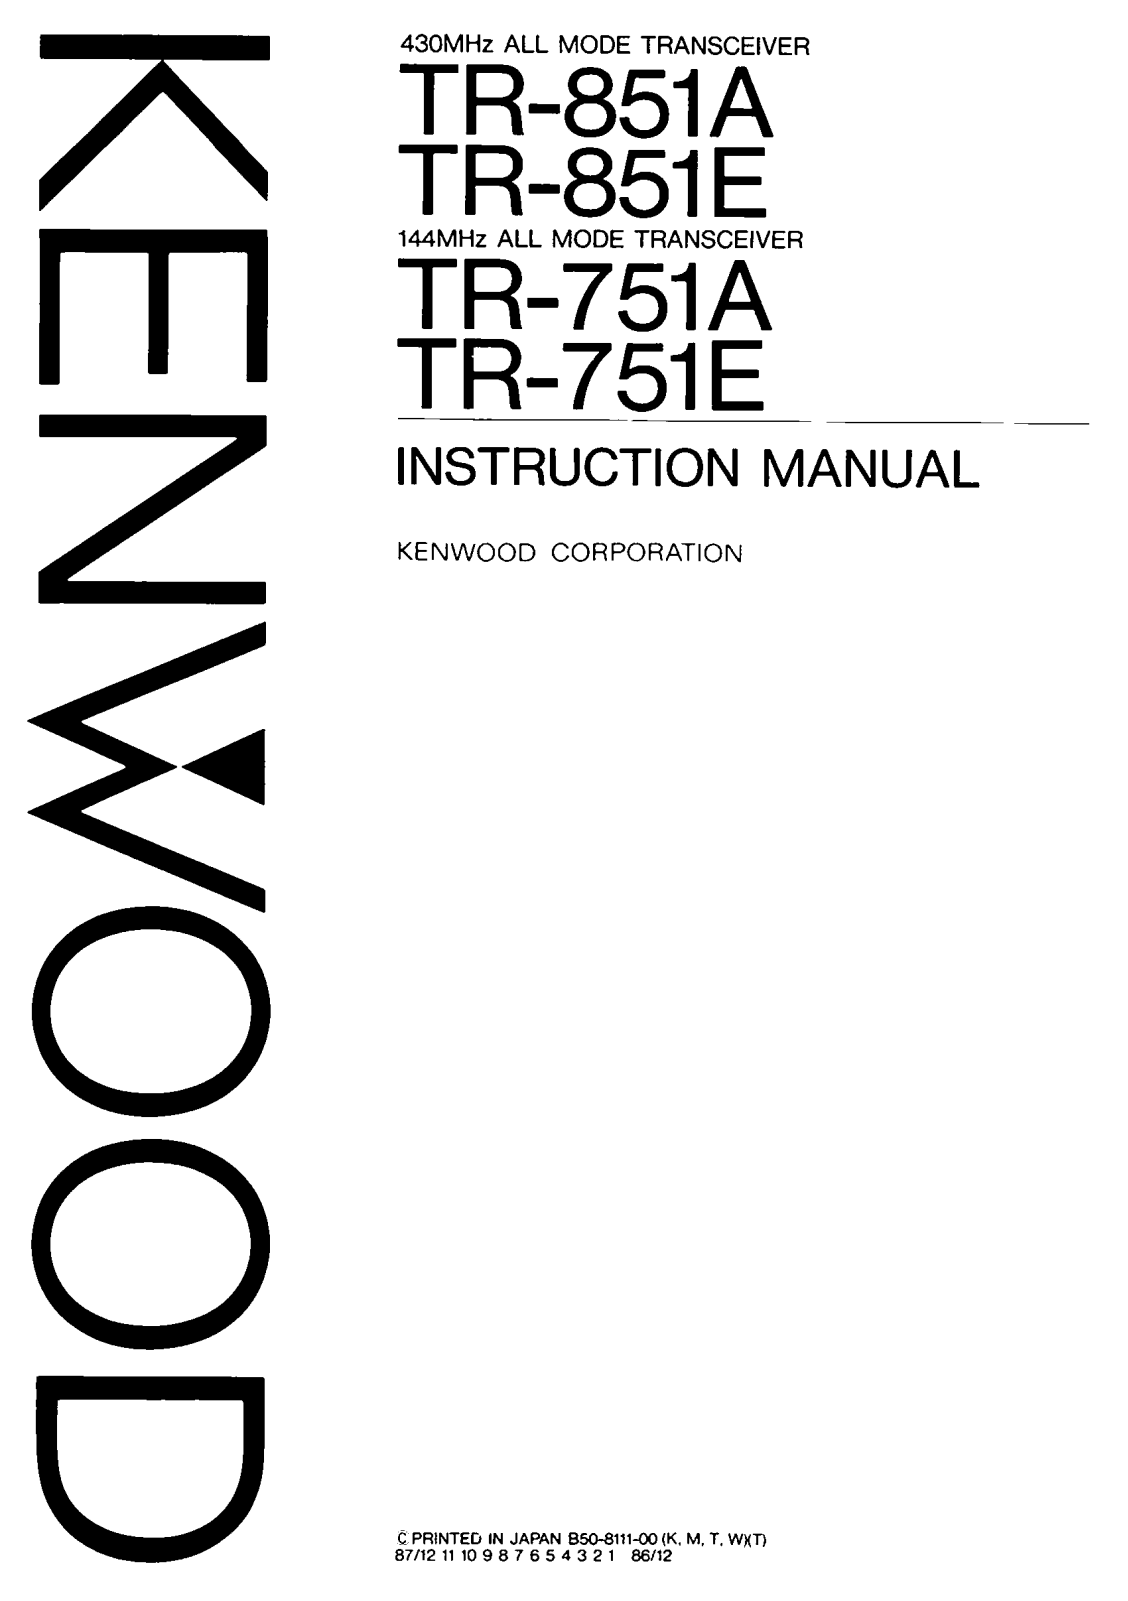 Kenwood TR-751 User Manual